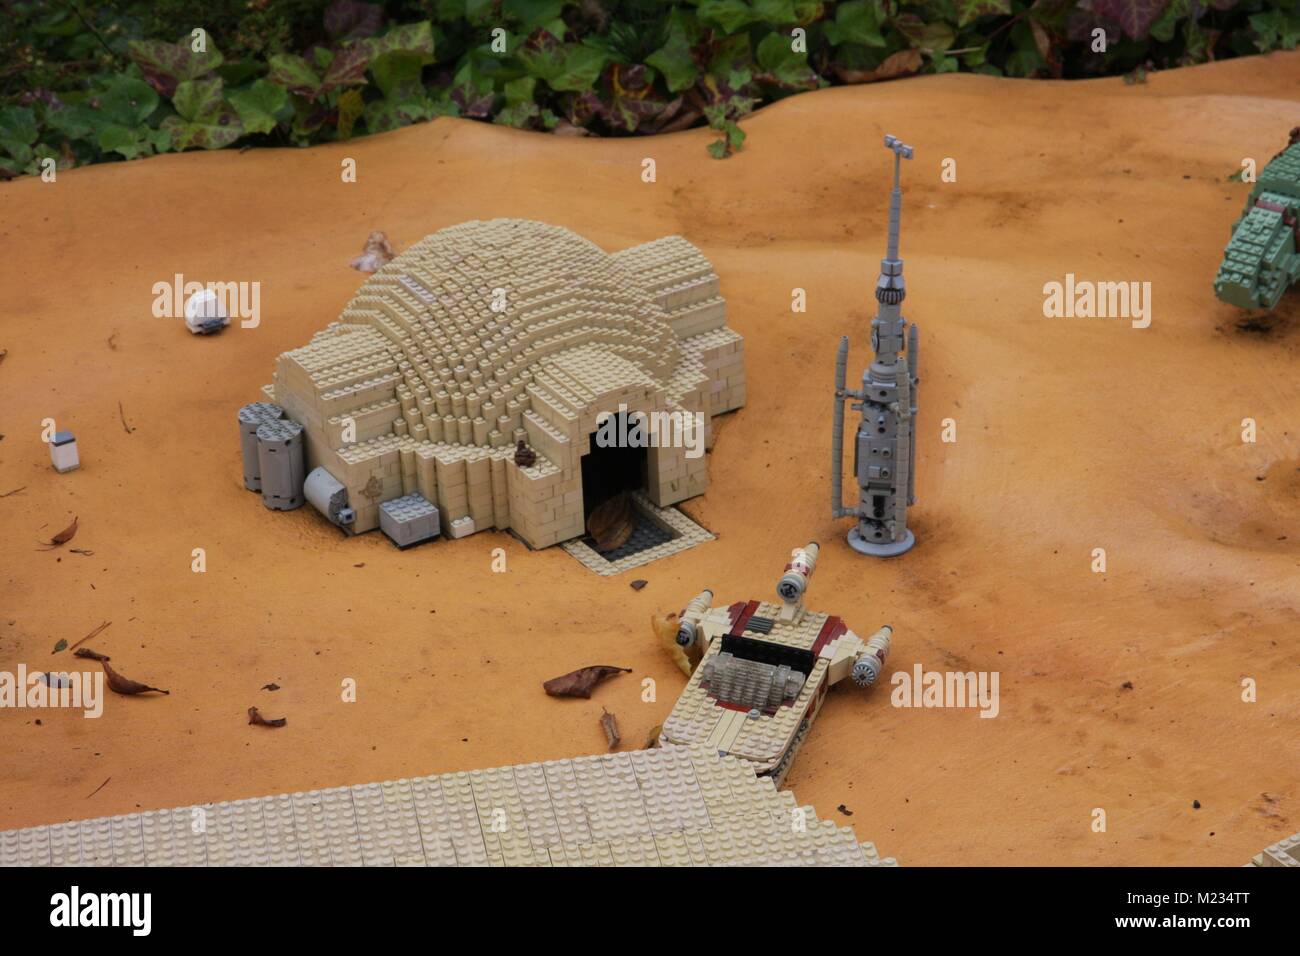 Lego Planet Tatooine - LEGOLAND Billund, Denmark Stock Photo - Alamy